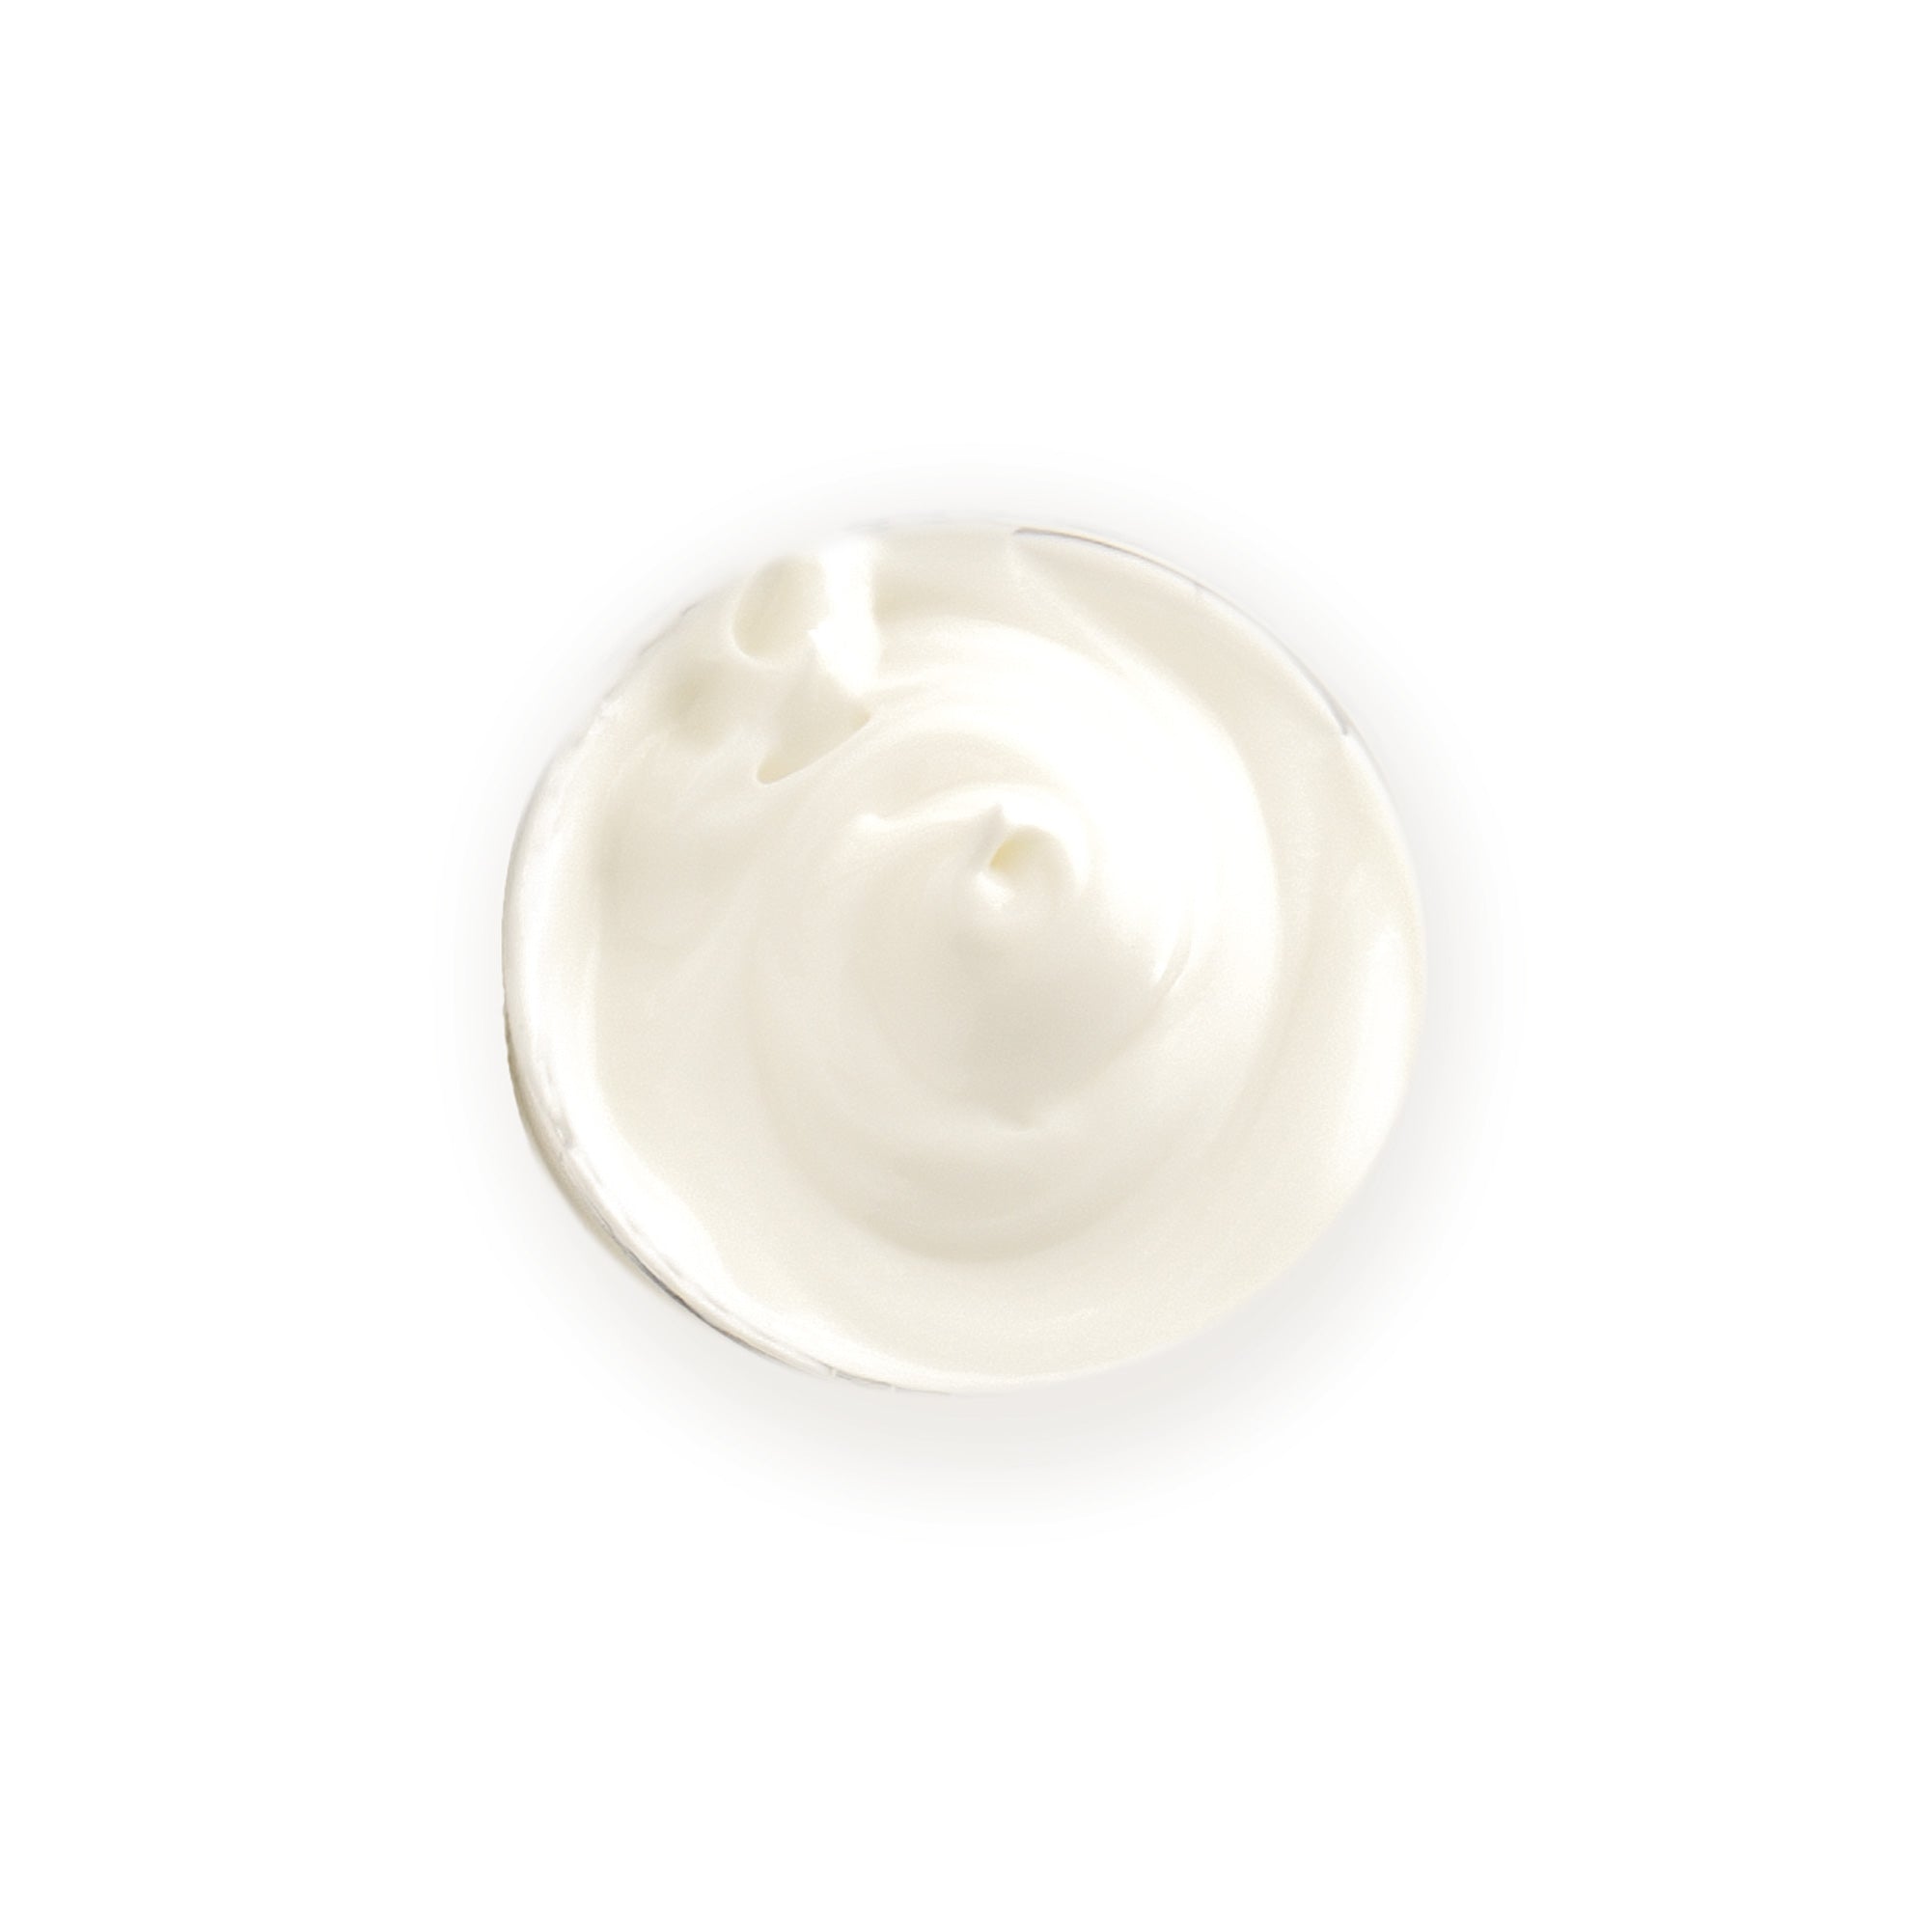 Prija Toning Body Cream (12.84 Fluid Ounce)